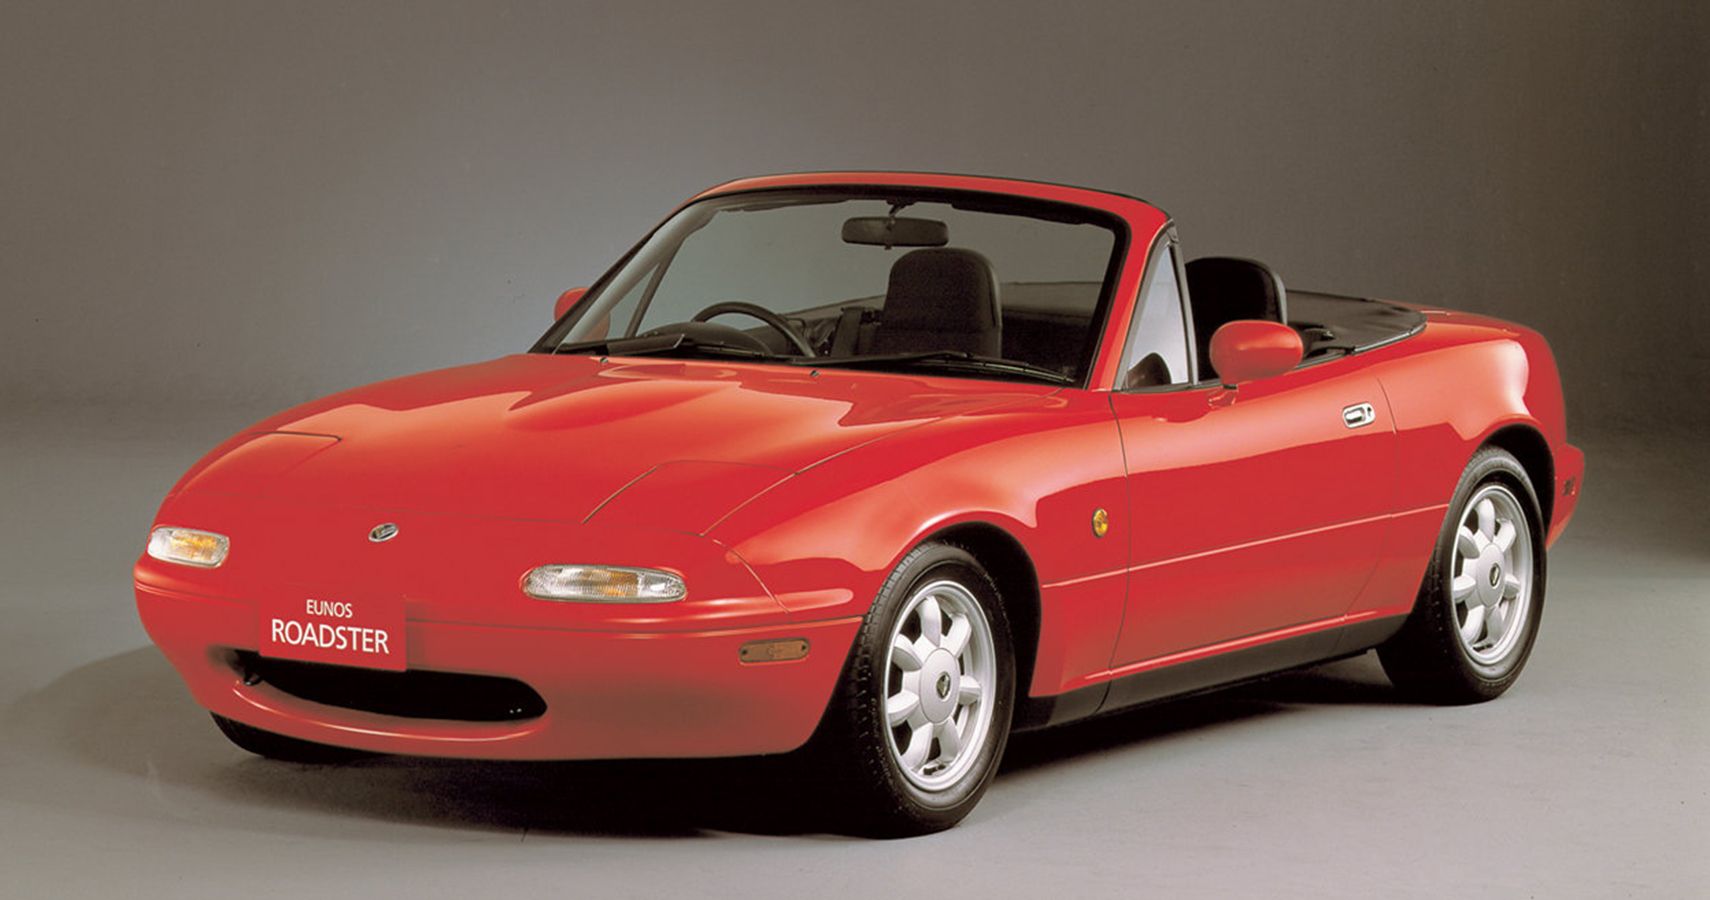 The Mazda MX-5 Miata: How an Iconic Sports Car Evolved